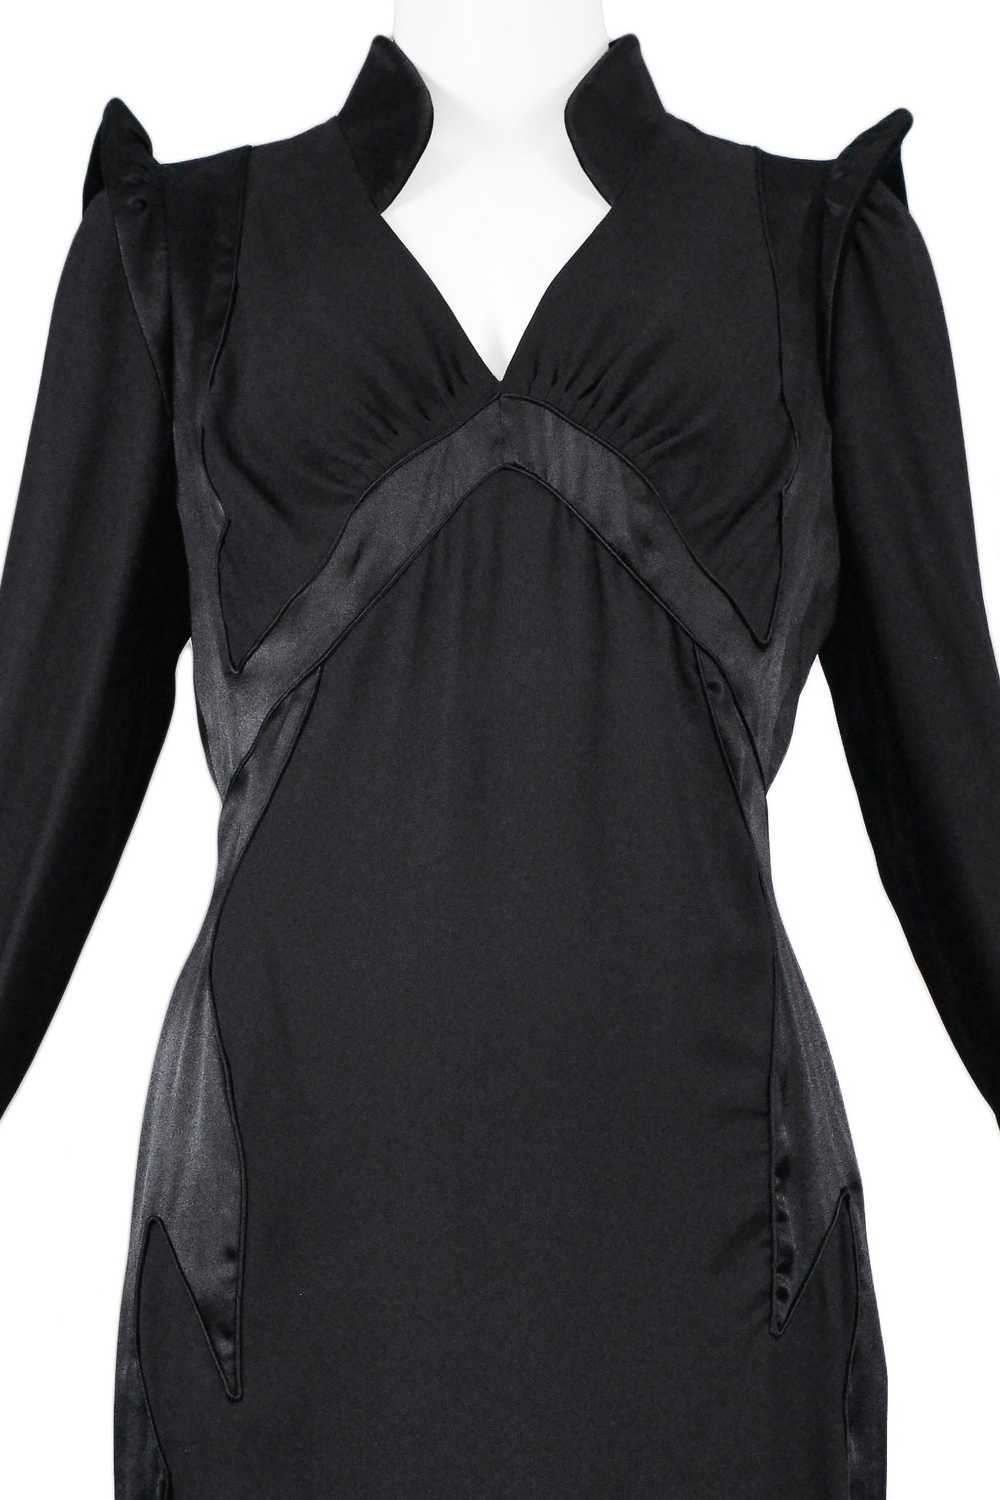 YSL BY TOM FORD BLACK SATIN MANDARIN DRESS 2004 - image 4